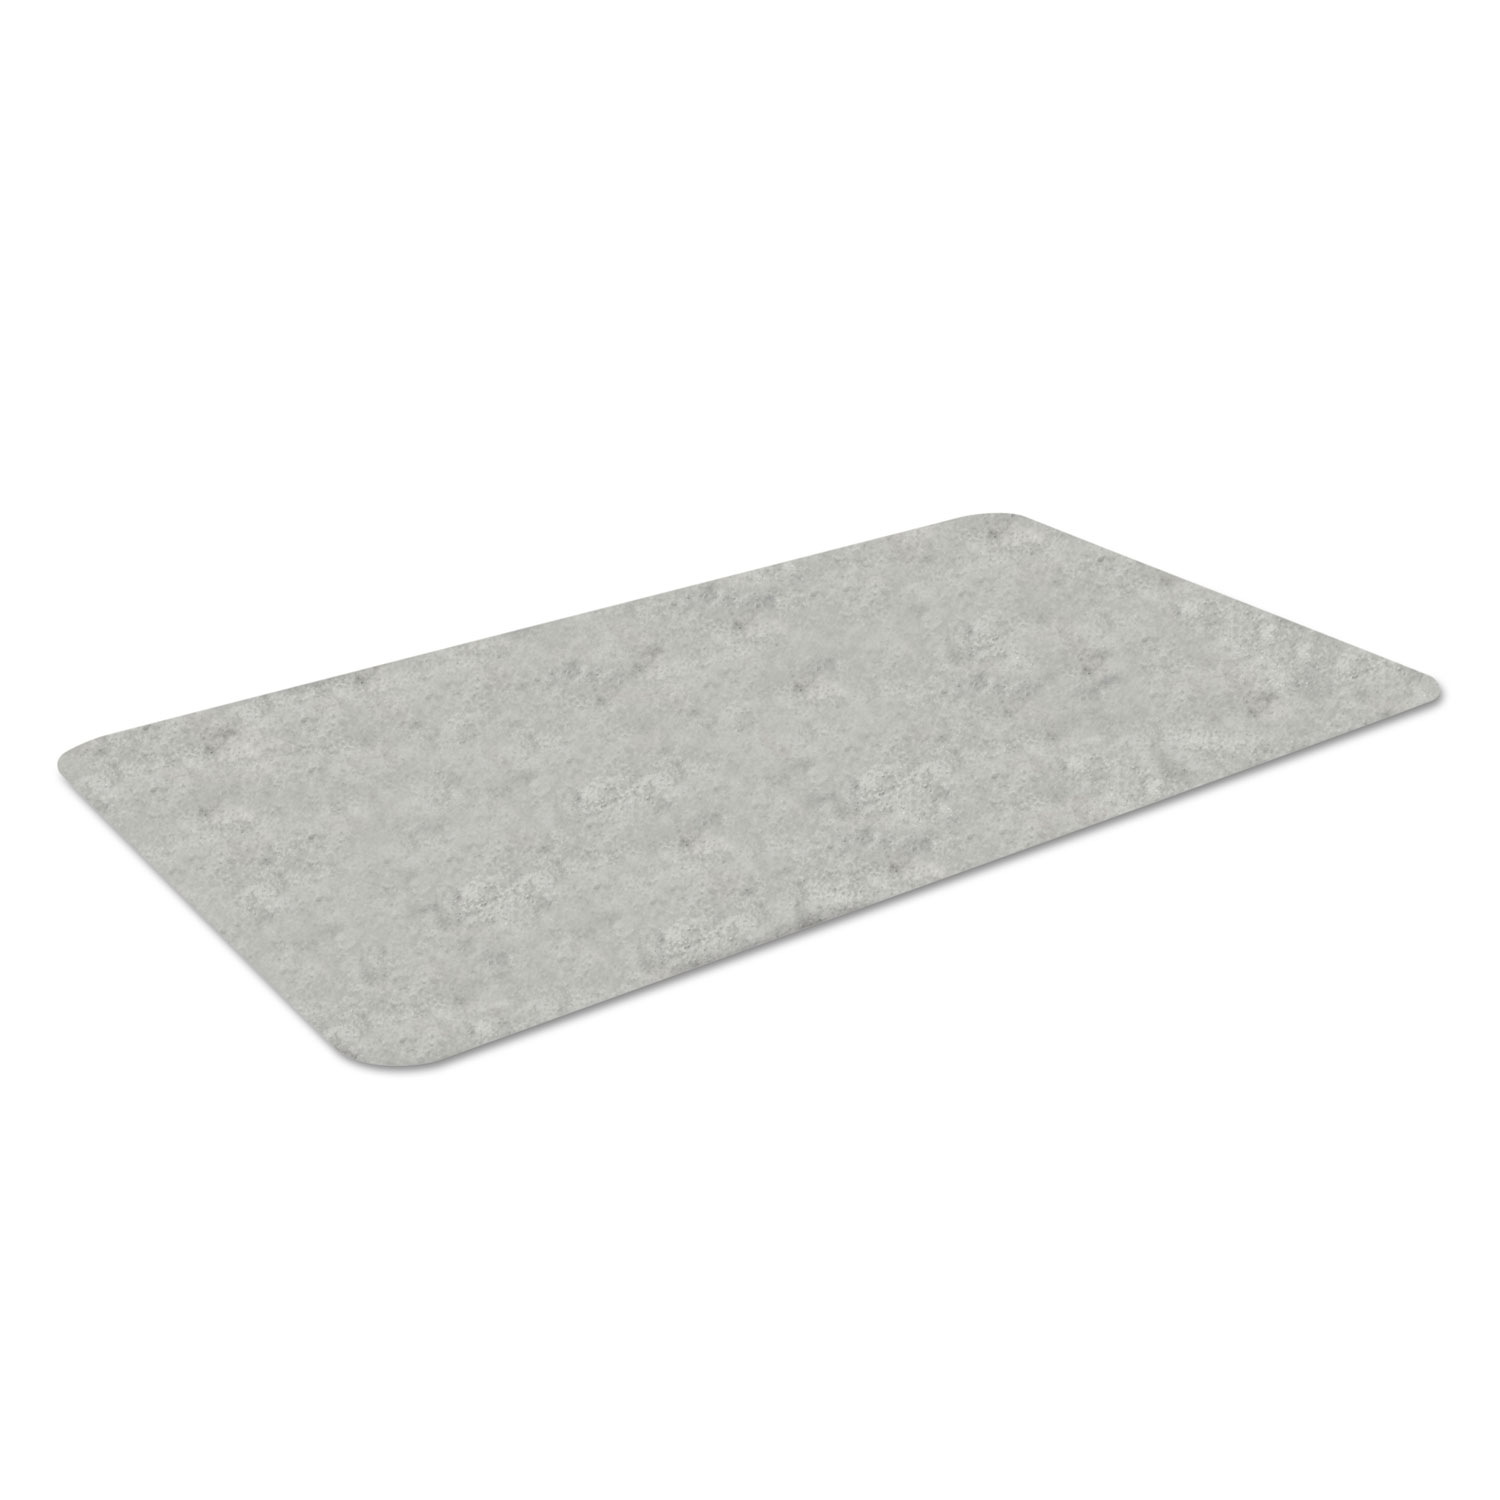 Workers-Delight Slate Standard Anti-Fatigue Mat, 36 x 60, Light Gray